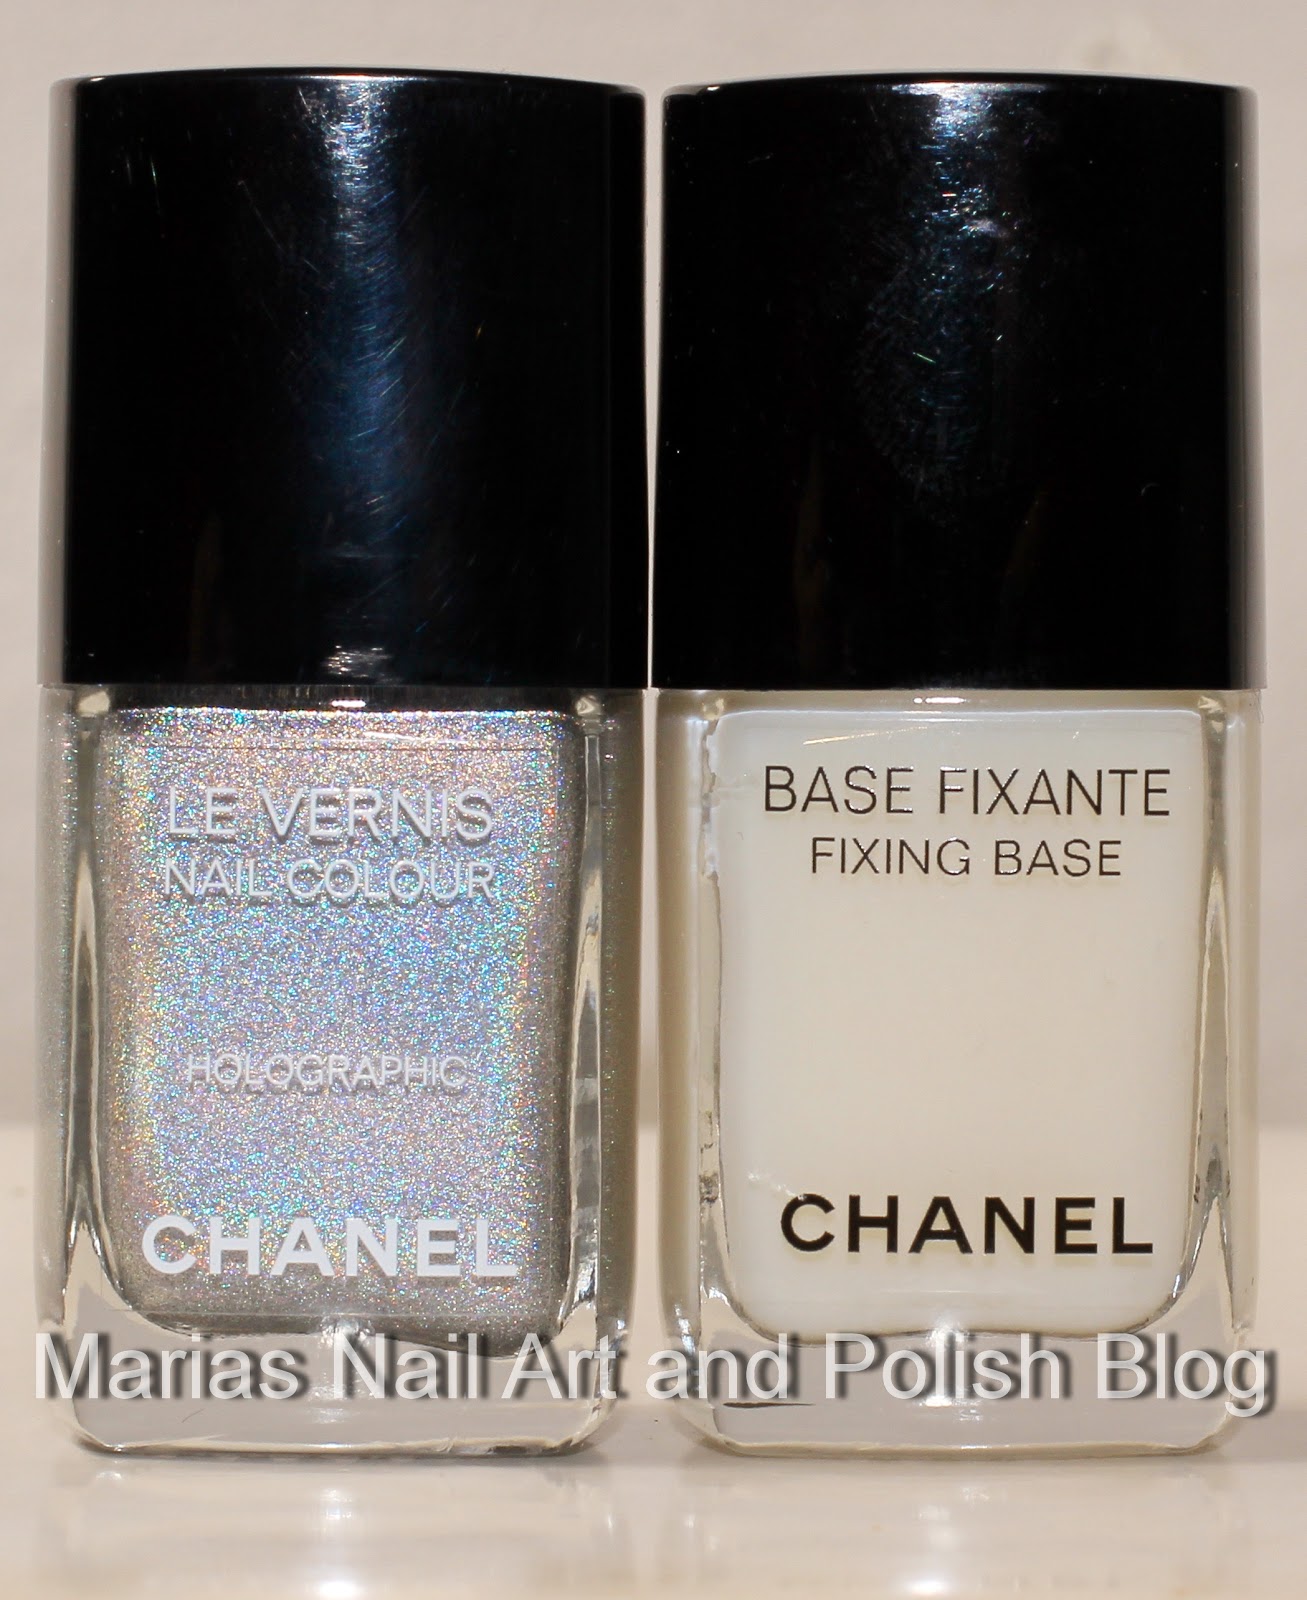 Marias Nail Art and Polish Blog: Chanel Mythique 512 swatches